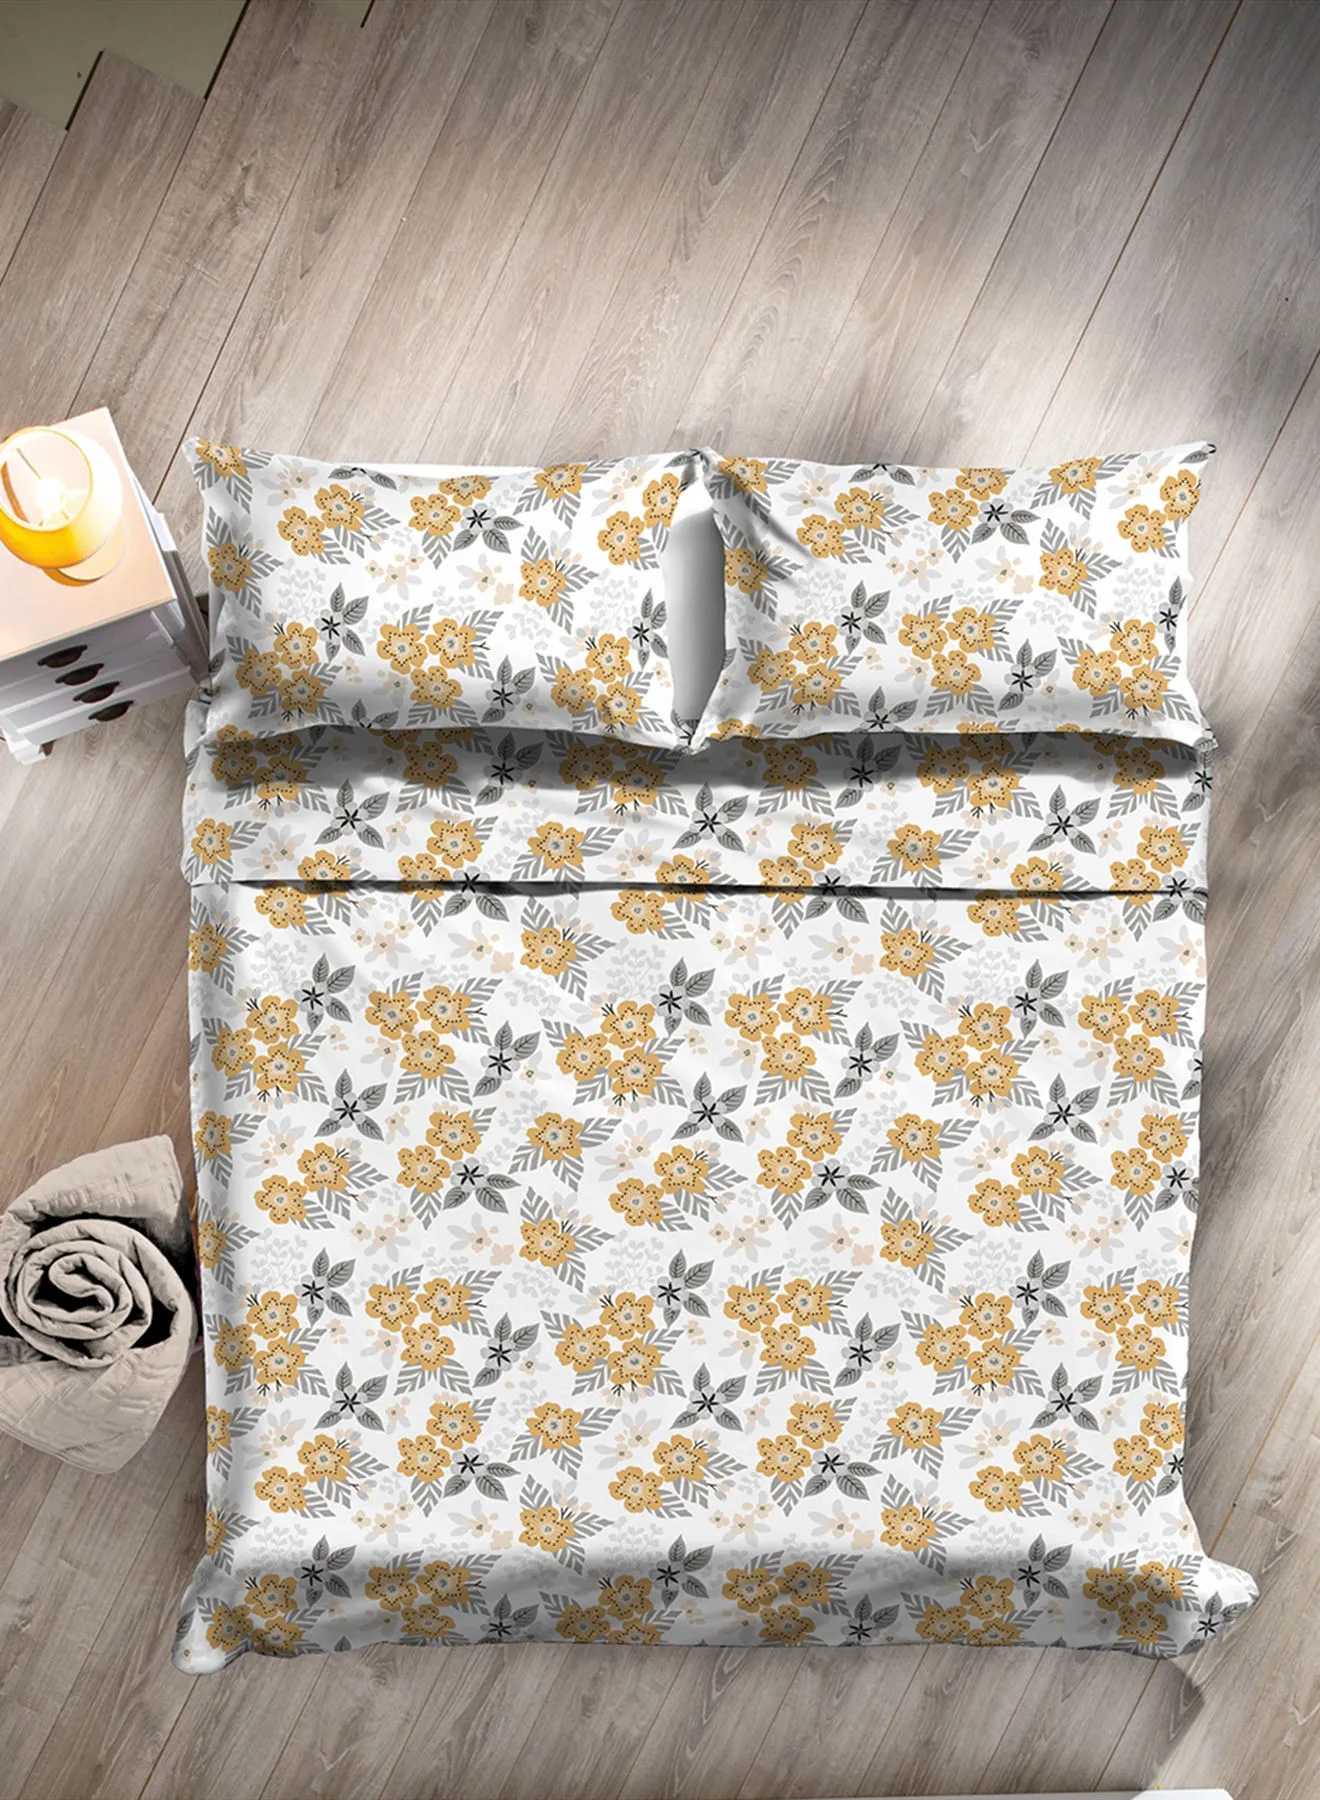 Amal Duvet Cover - With Pillow Cover 50X75 Cm, Comforter 200X200 Cm, - For Queen Size Mattress - Multicolour 100% Cotton Percale -